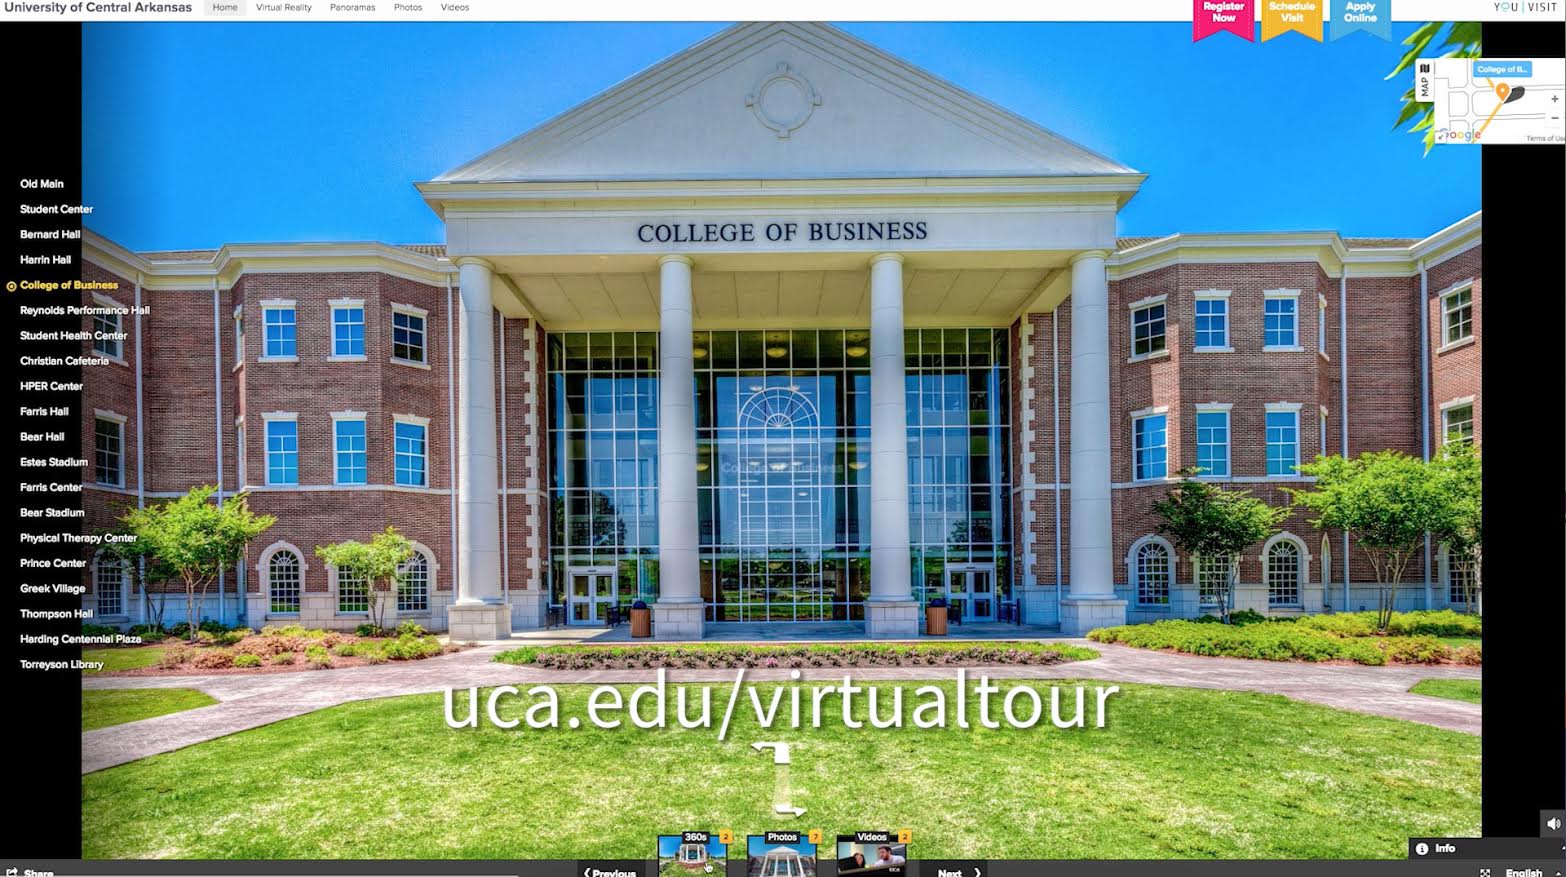 Uca университет. University of Central Arkansas. Виртуальный тур Uca. Edu university